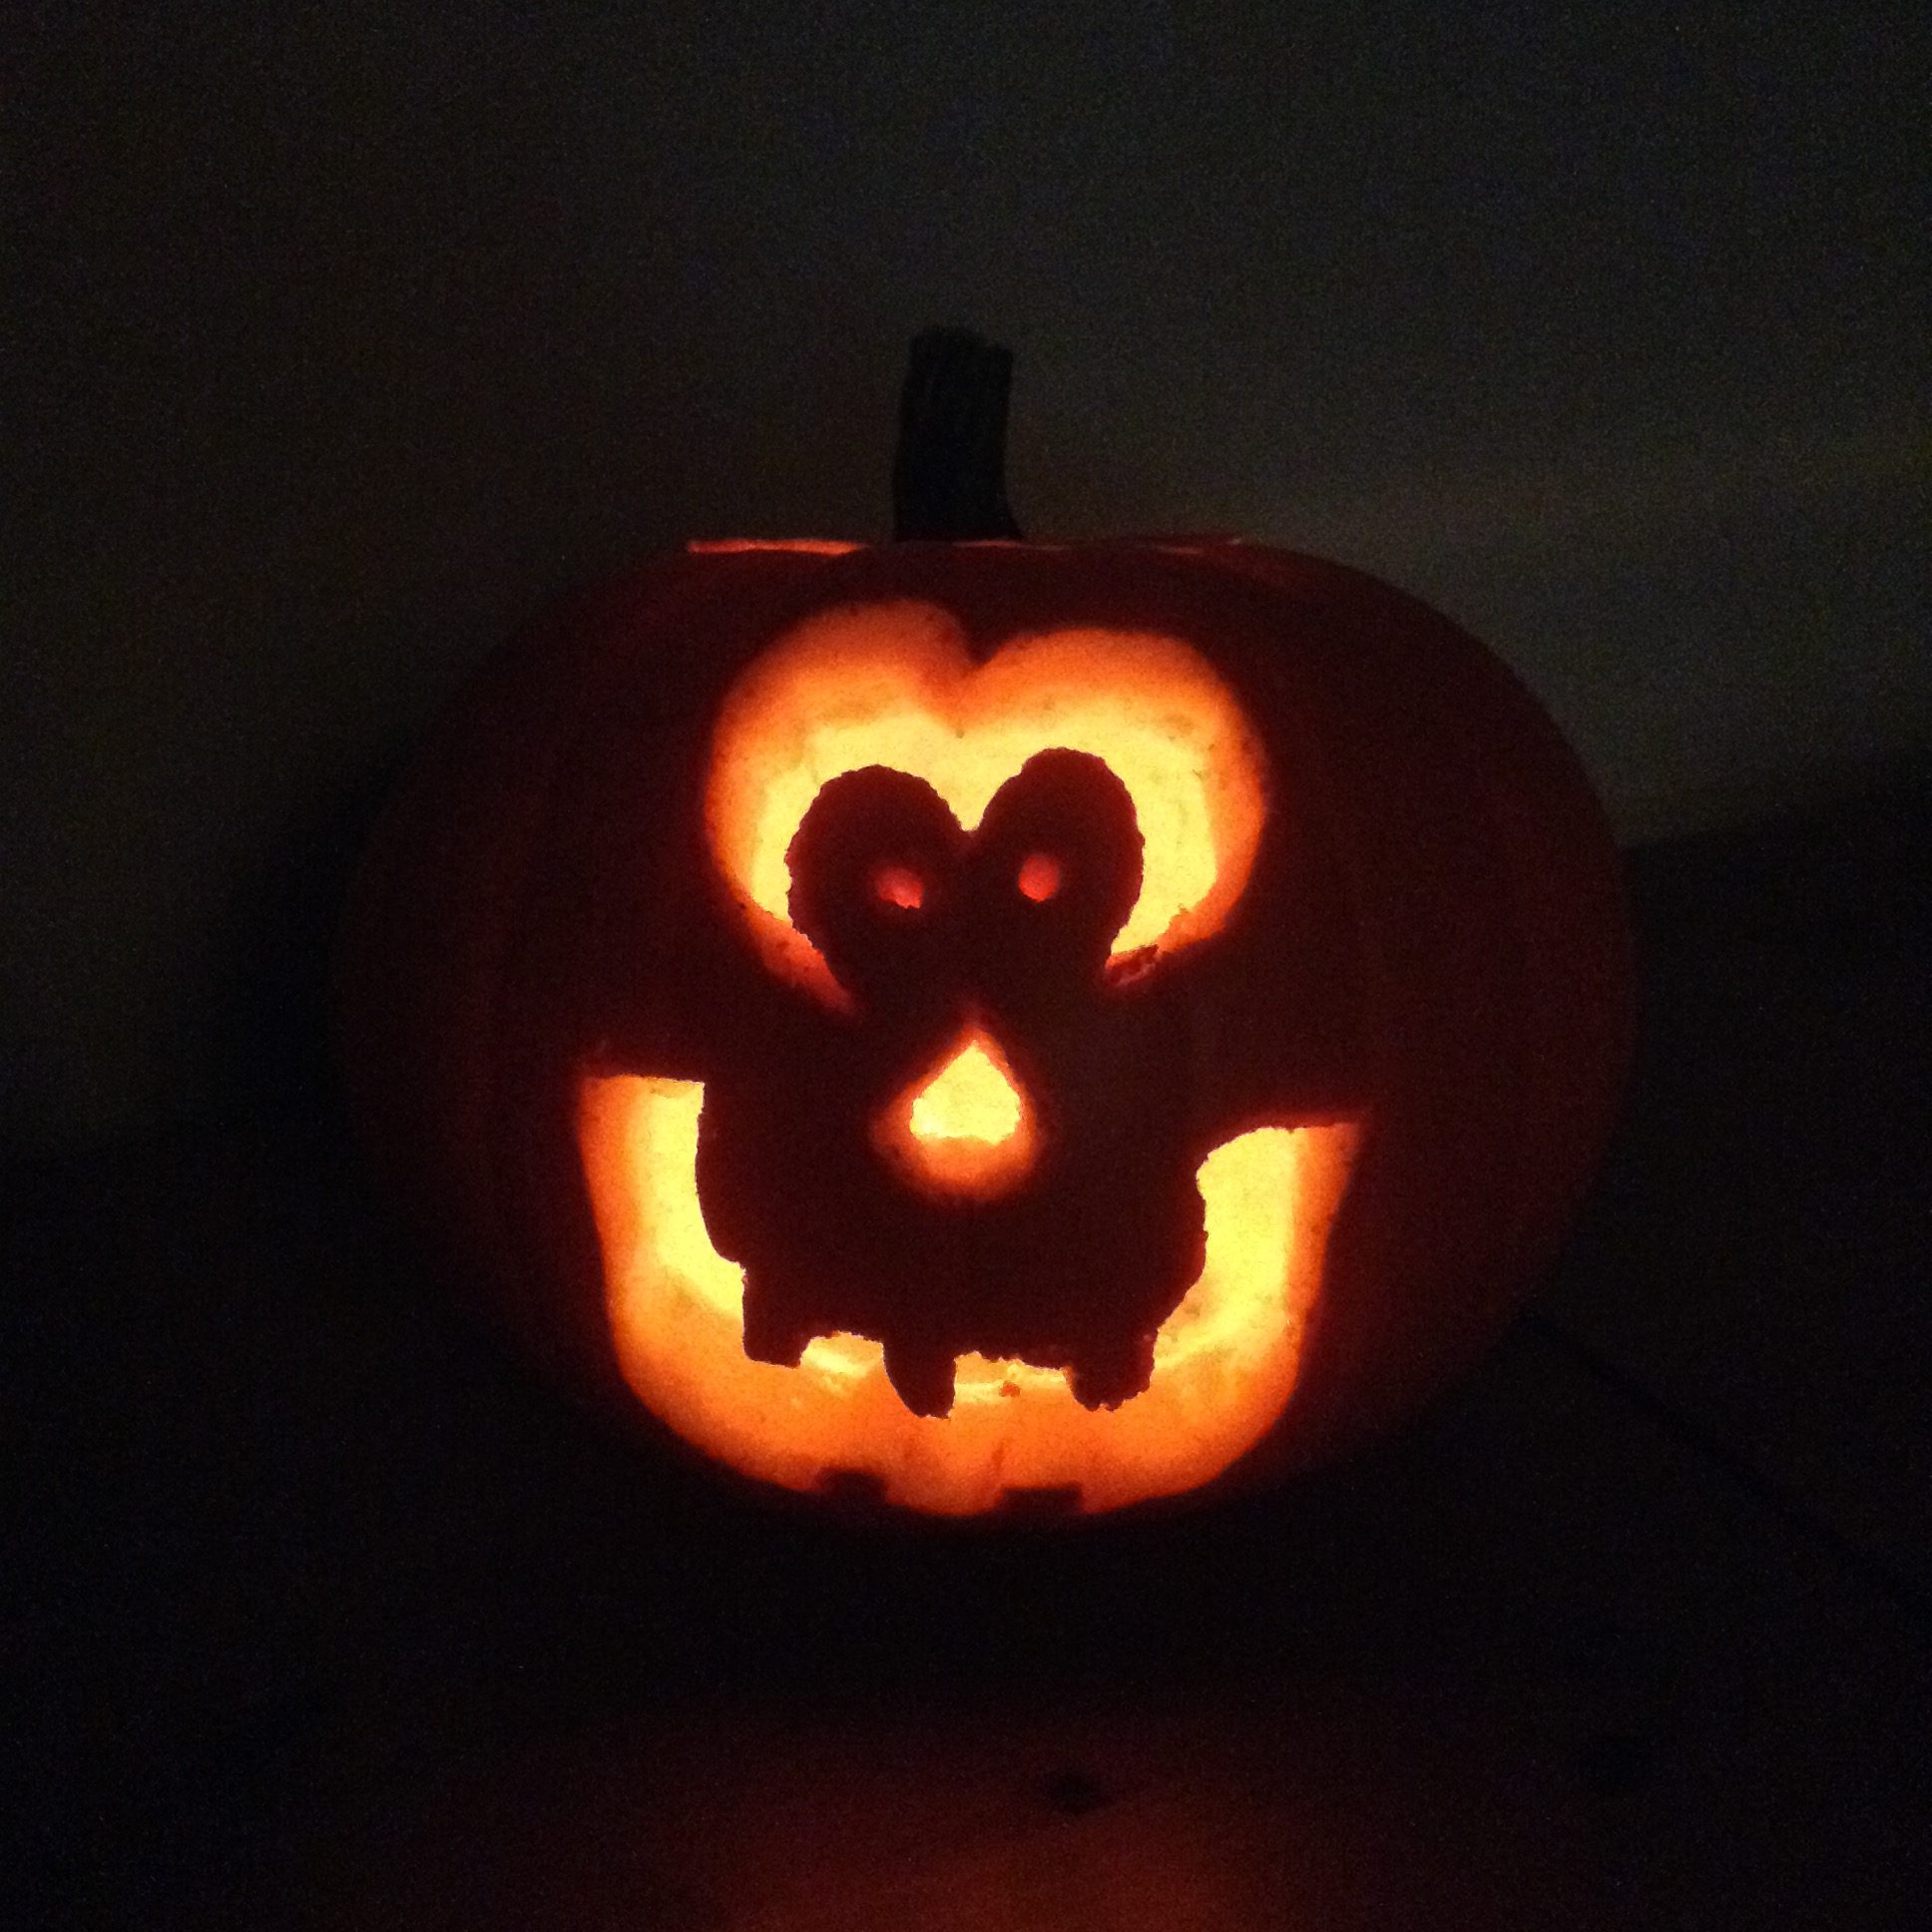 Halloween. Lit pumpkin in the dark